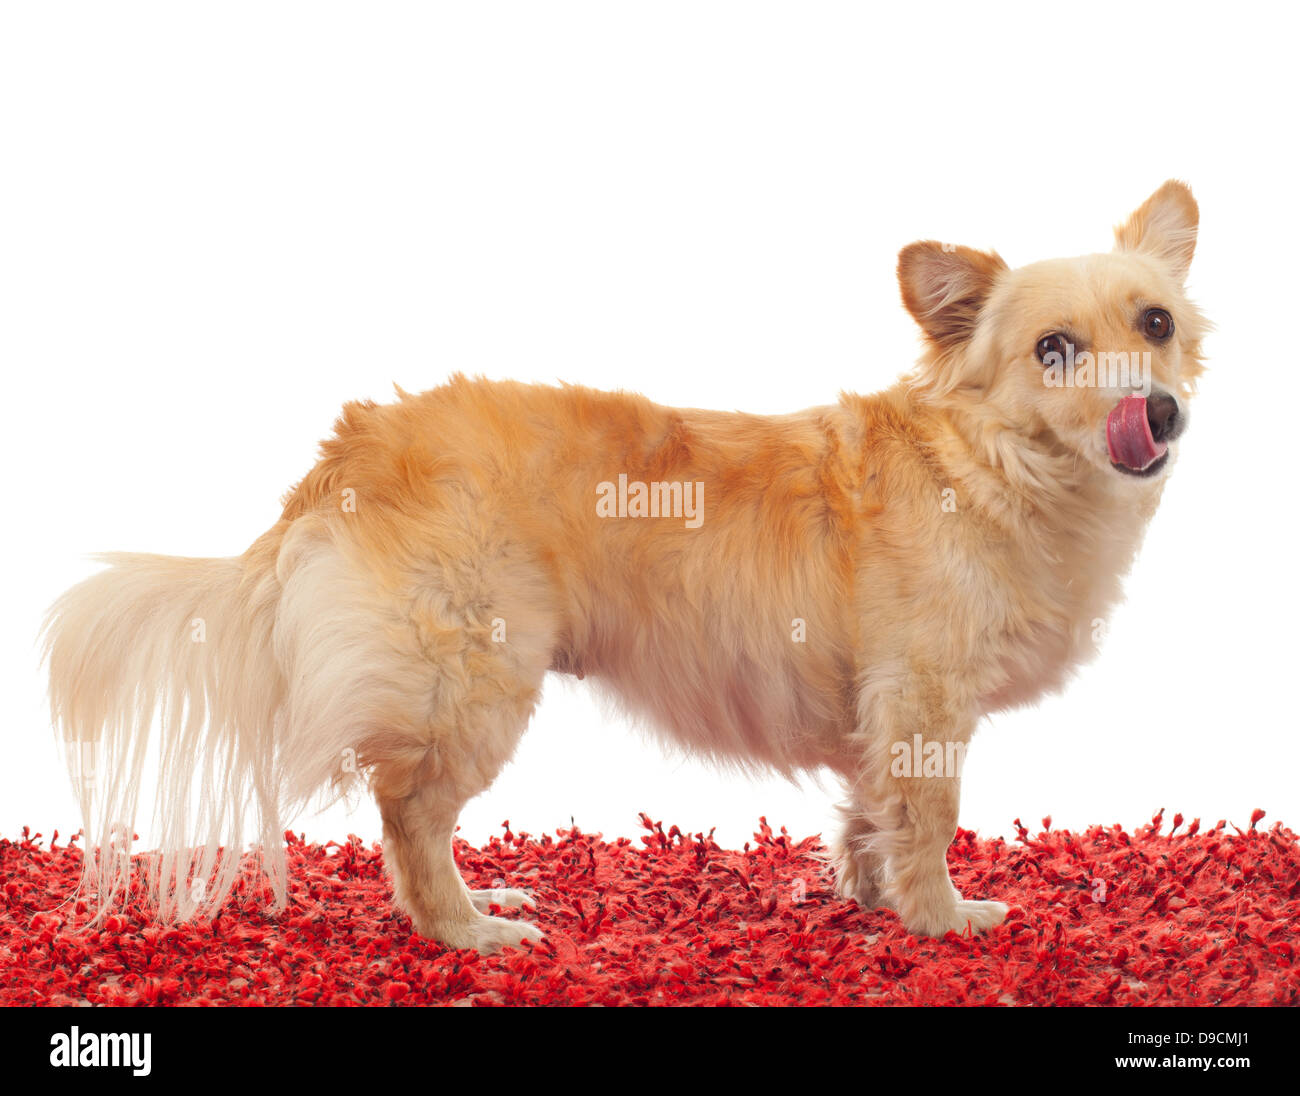 Spitz dog on red carpet and white background Stock Photo